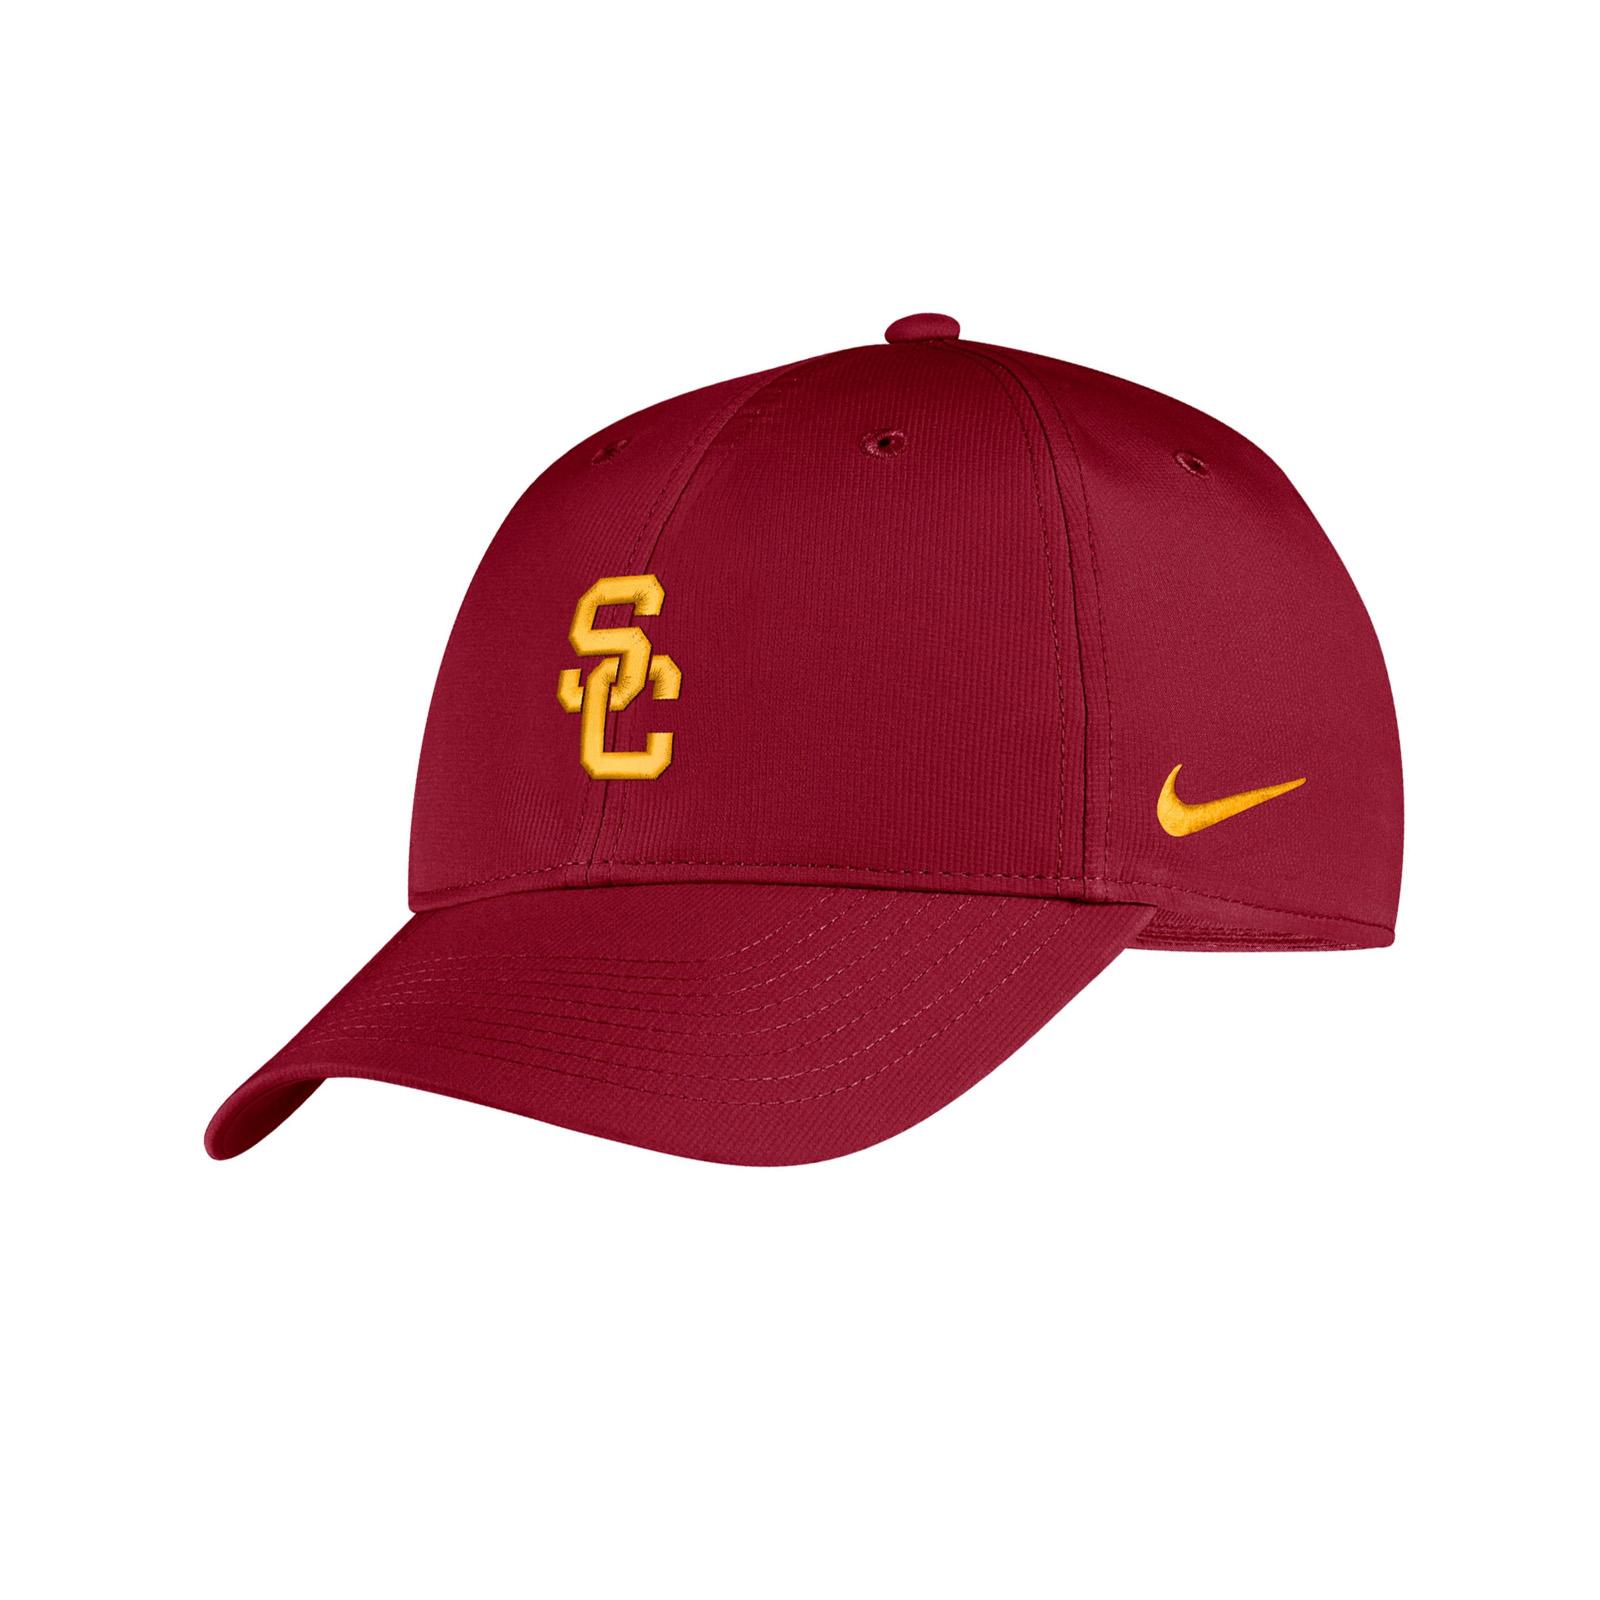 University of Southern California Ladies Hat, Ladies Snapback, USC Trojans  Caps